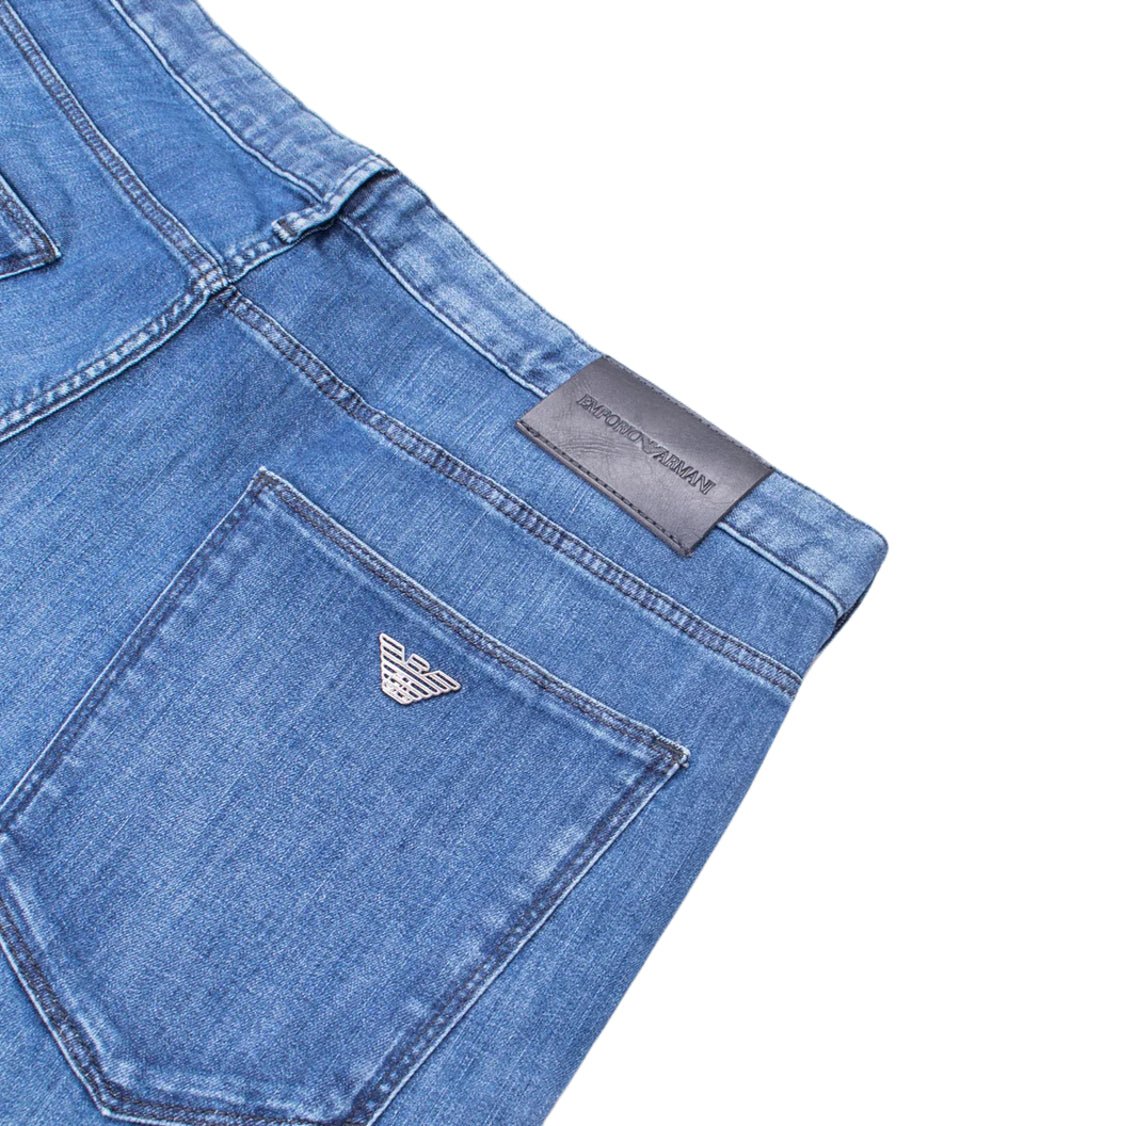 Emporio Armani 8N1J75 1D85Z Slim Fit Jeans - 0943 Blue Ch - Escape Menswear